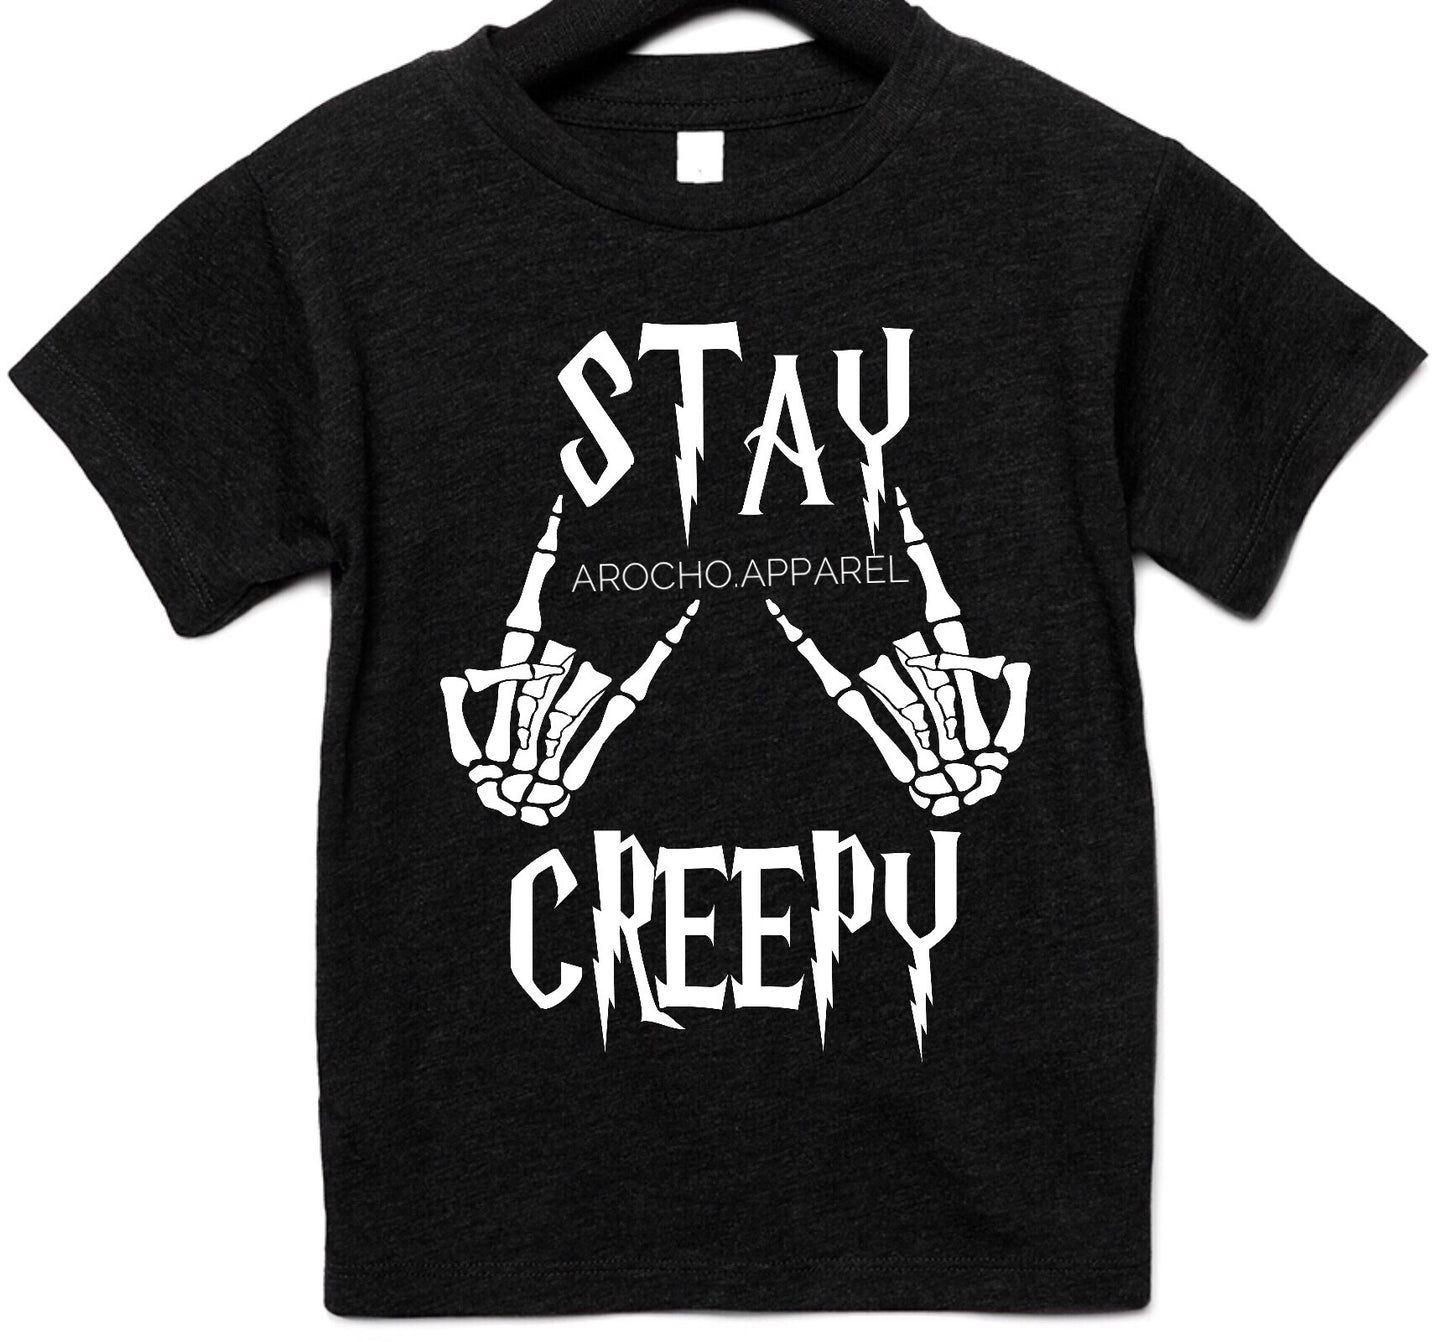 Stay creepy